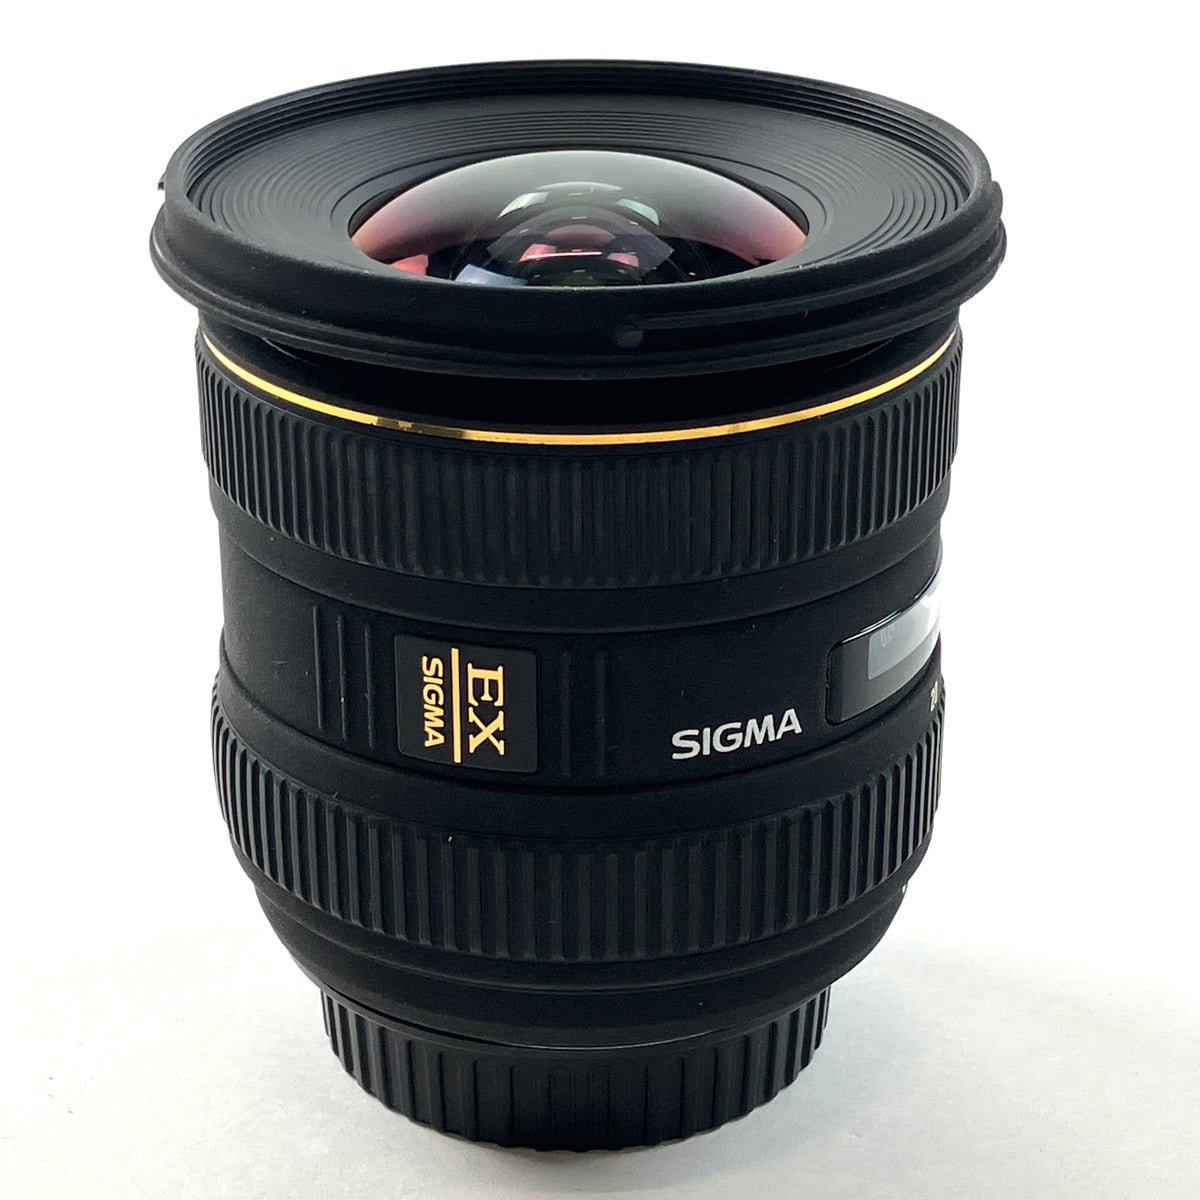 Sigma シグマ Ex 10-20mm f/4-5.6 ニコン用 - culturabombinhas.com.br